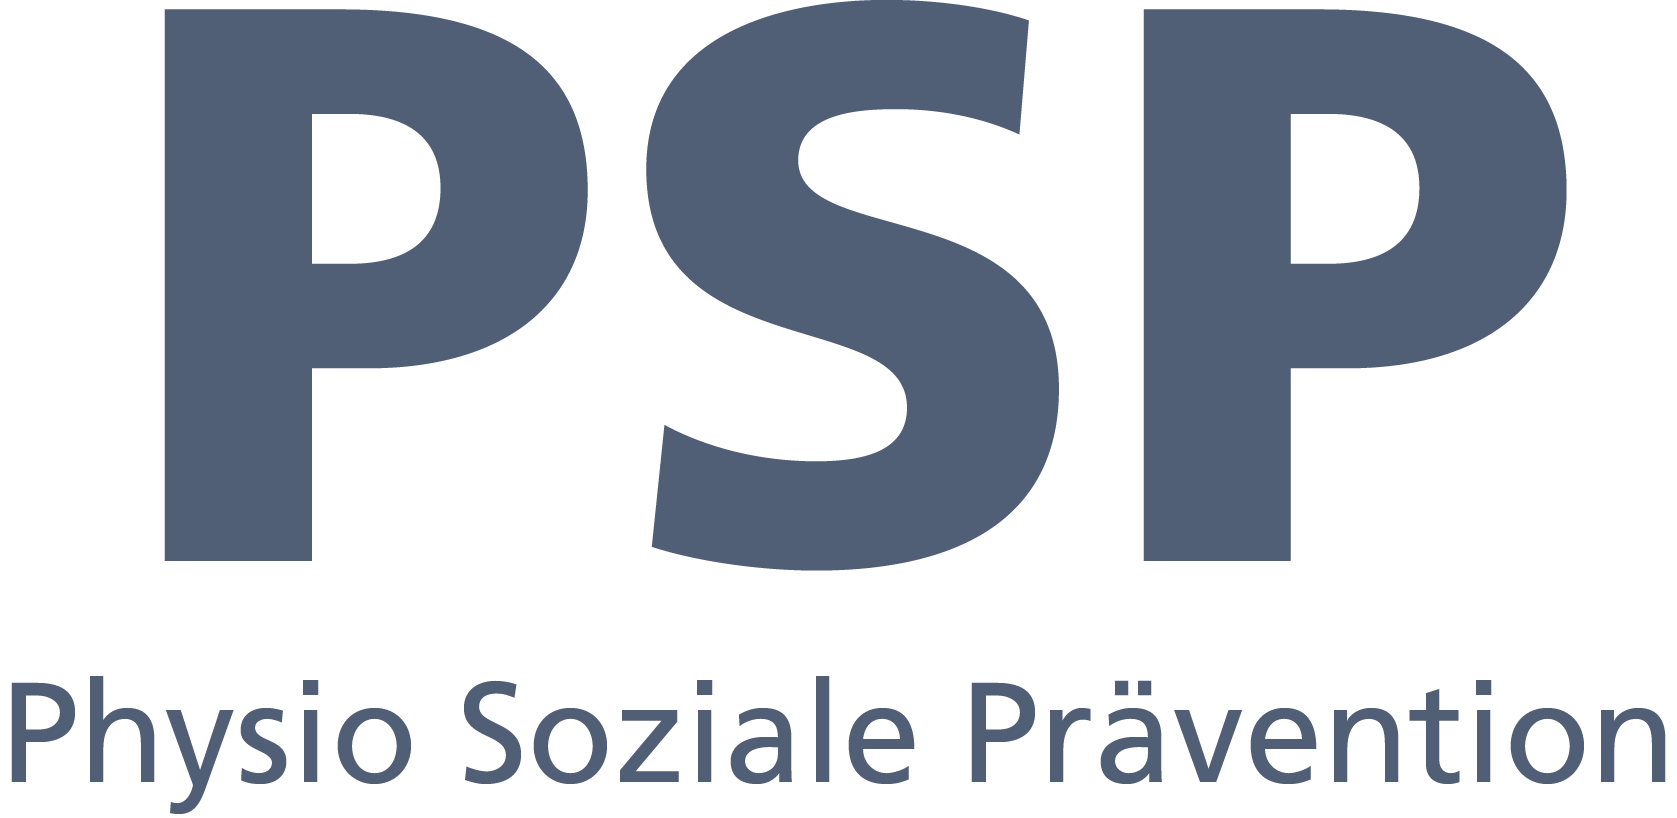 PSP – Physio Soziale Prävention mit Maria Kammermeier